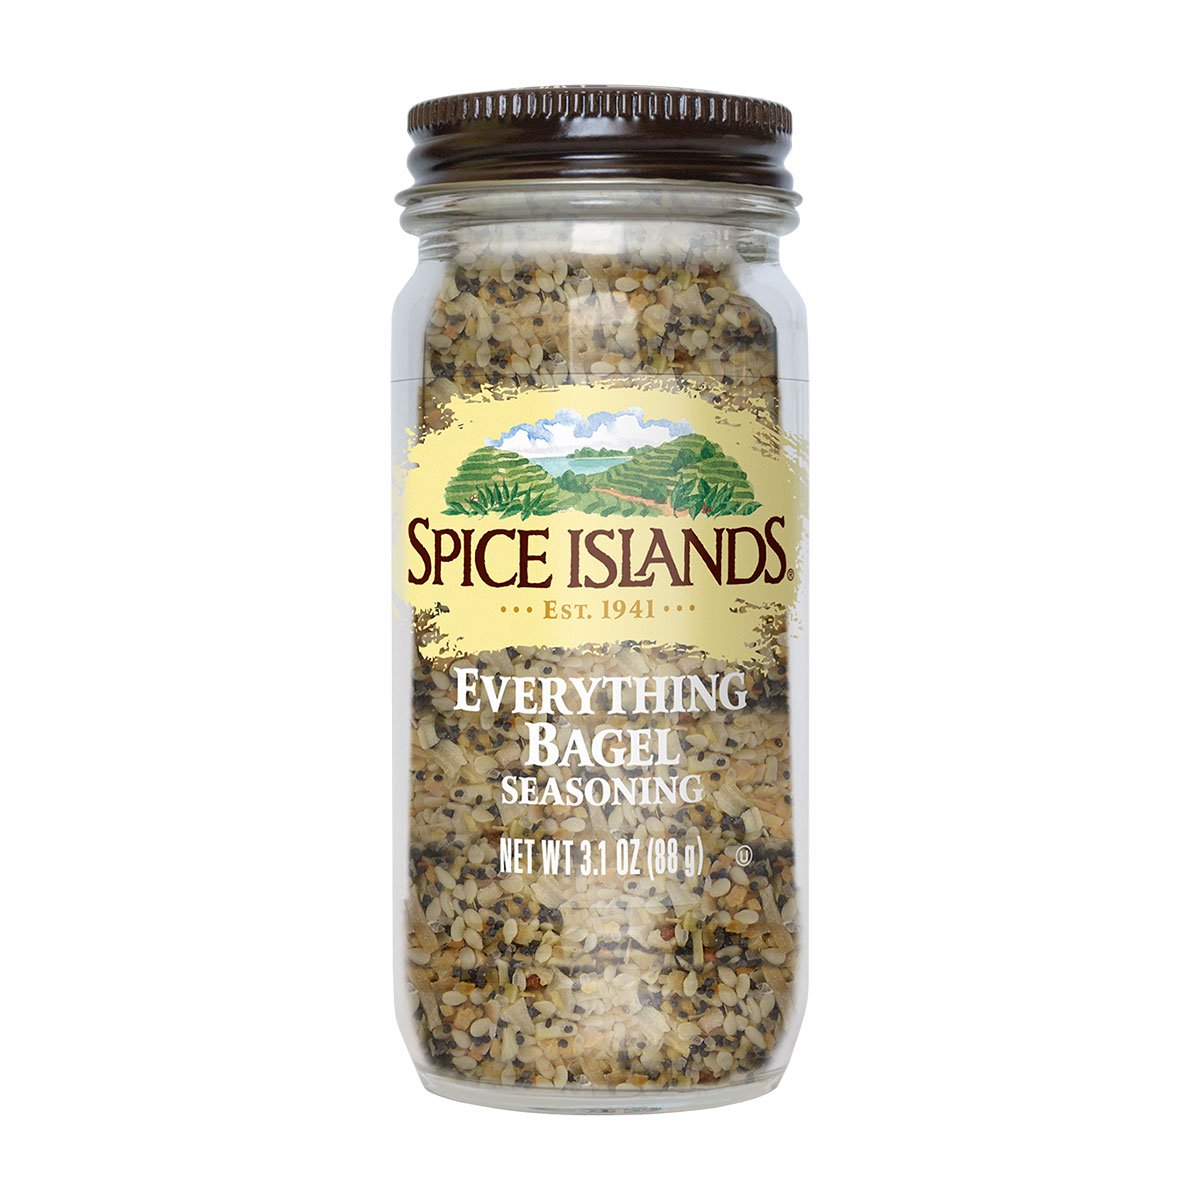 Spice Islands Everything Bagel Seasoning, 3.10 oz.